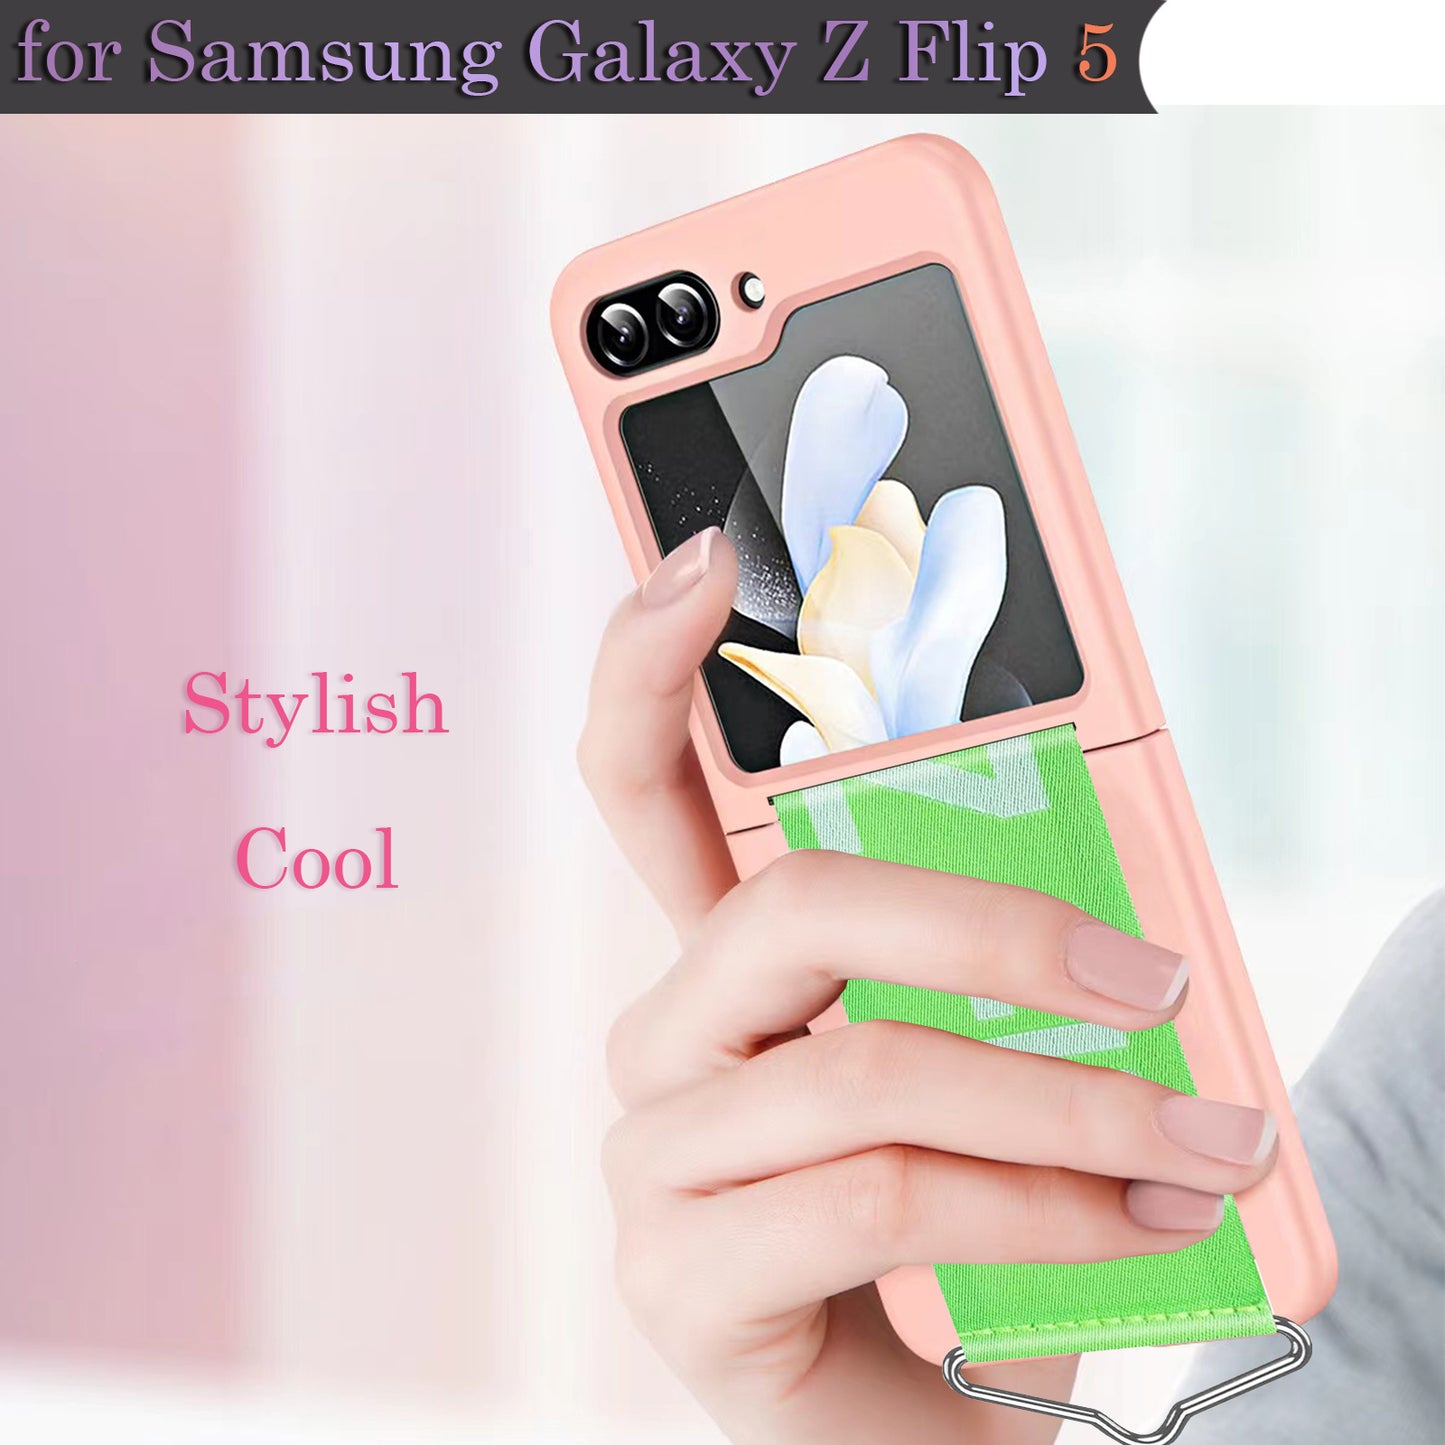 Miitoomo for Samsung Galaxy Z Flip 5 Case with Wrist Band "Z Flip" Letters Pattern